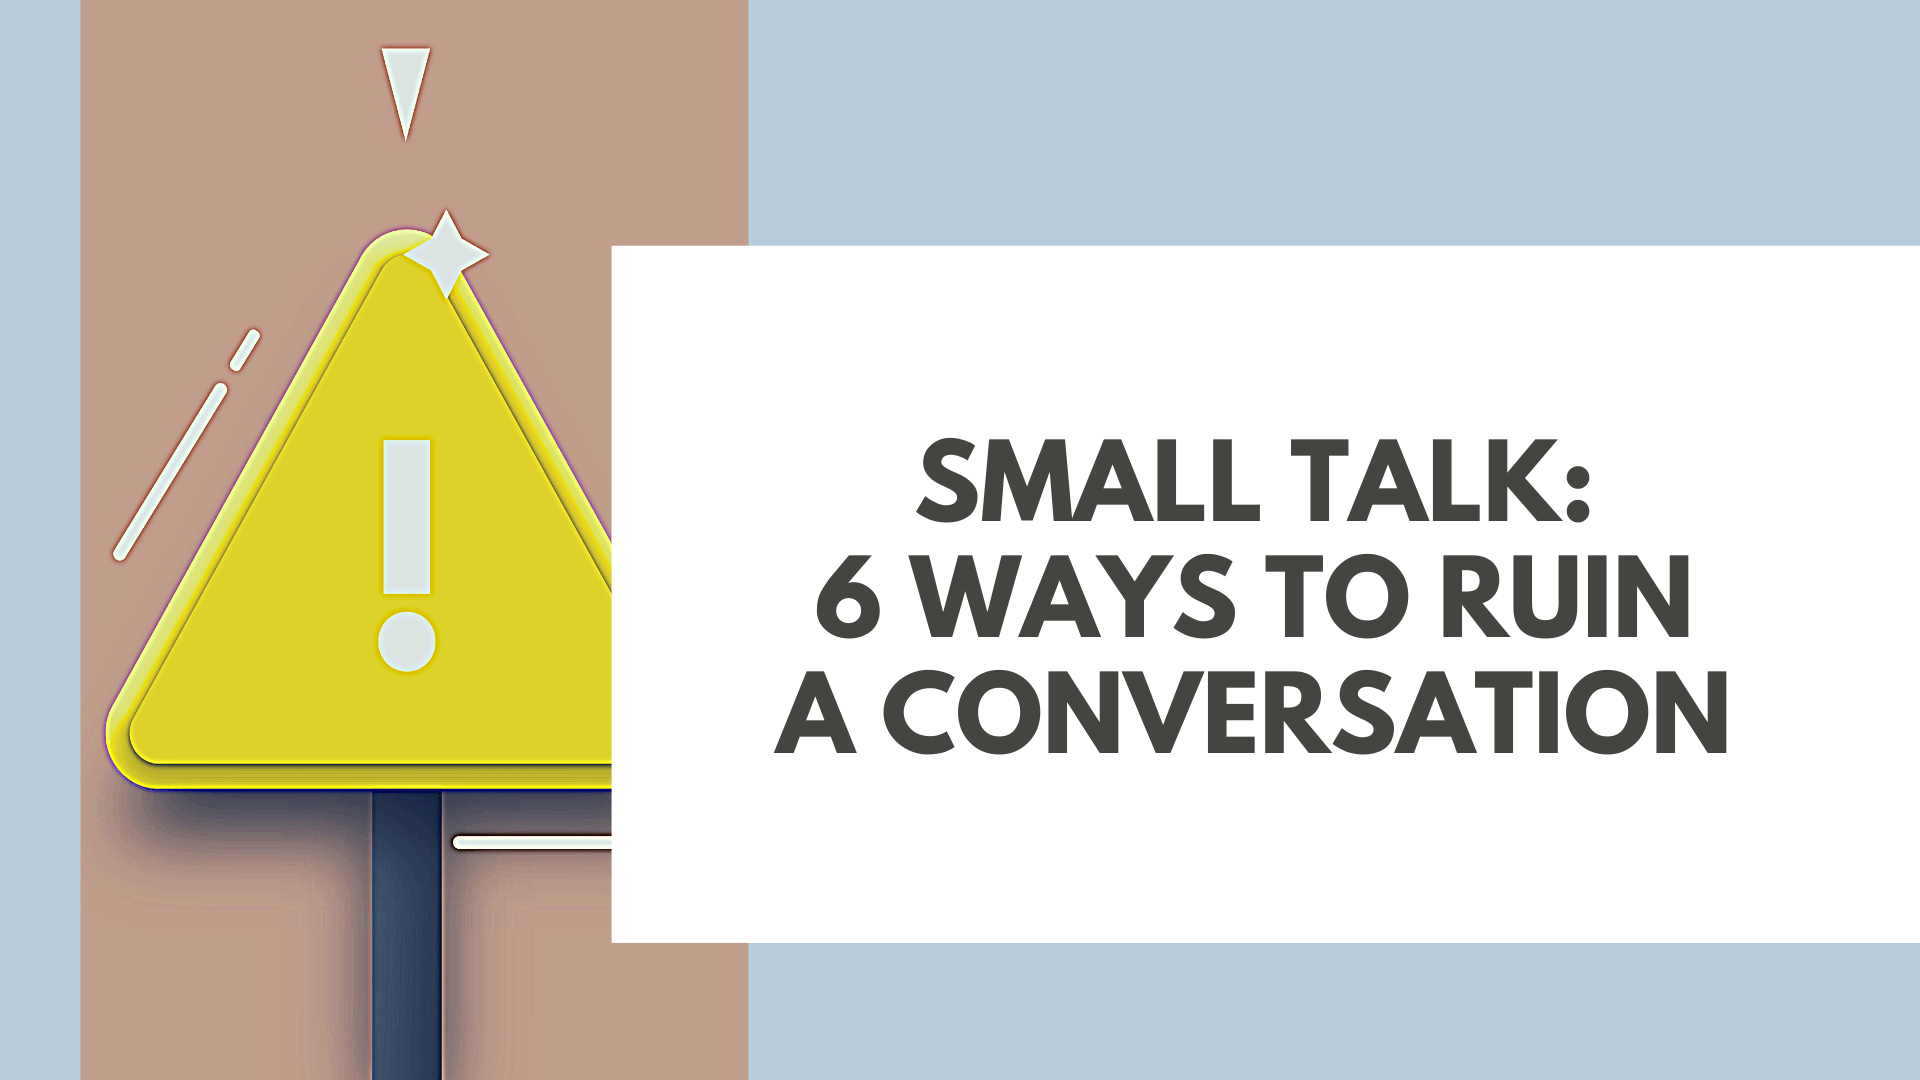 Small Talk: 6 Ways to Ruin a Conversation